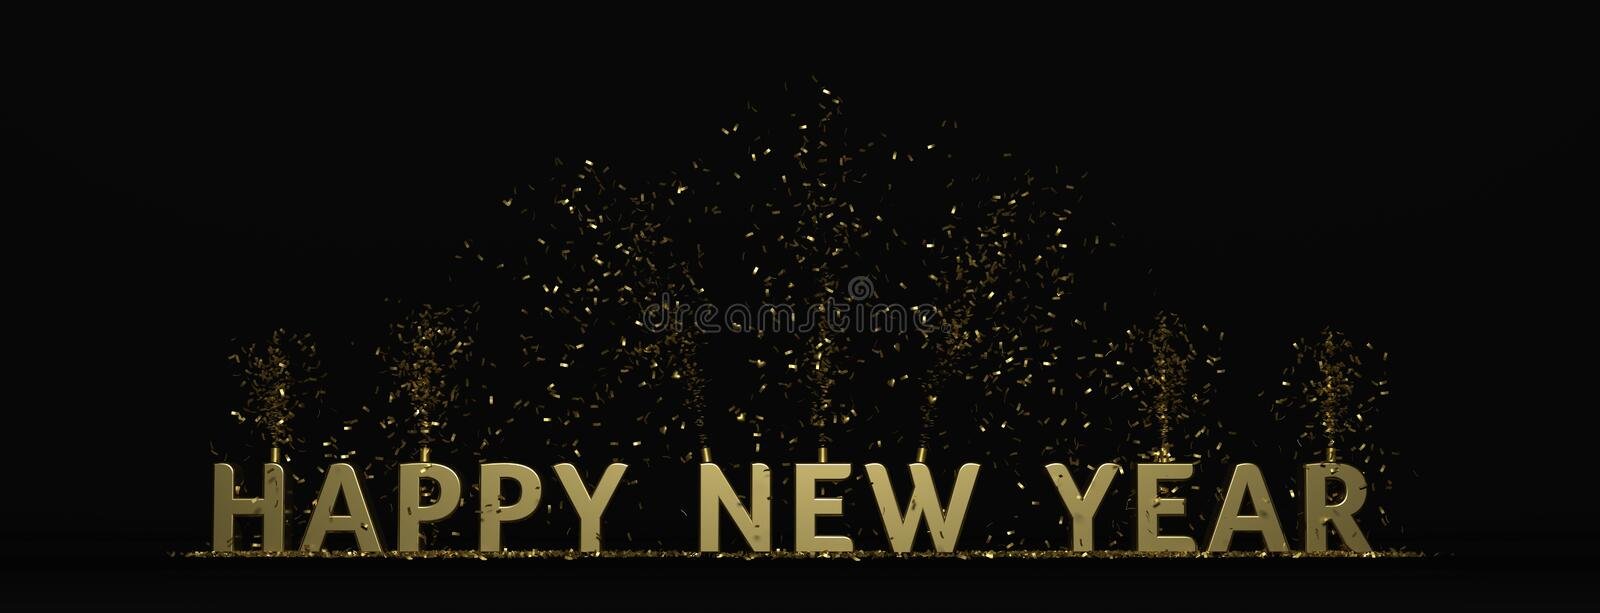 happy-new-year-text-illustration-background-happy-new-year-illustration-fireworks-black-background-158822863.jpg